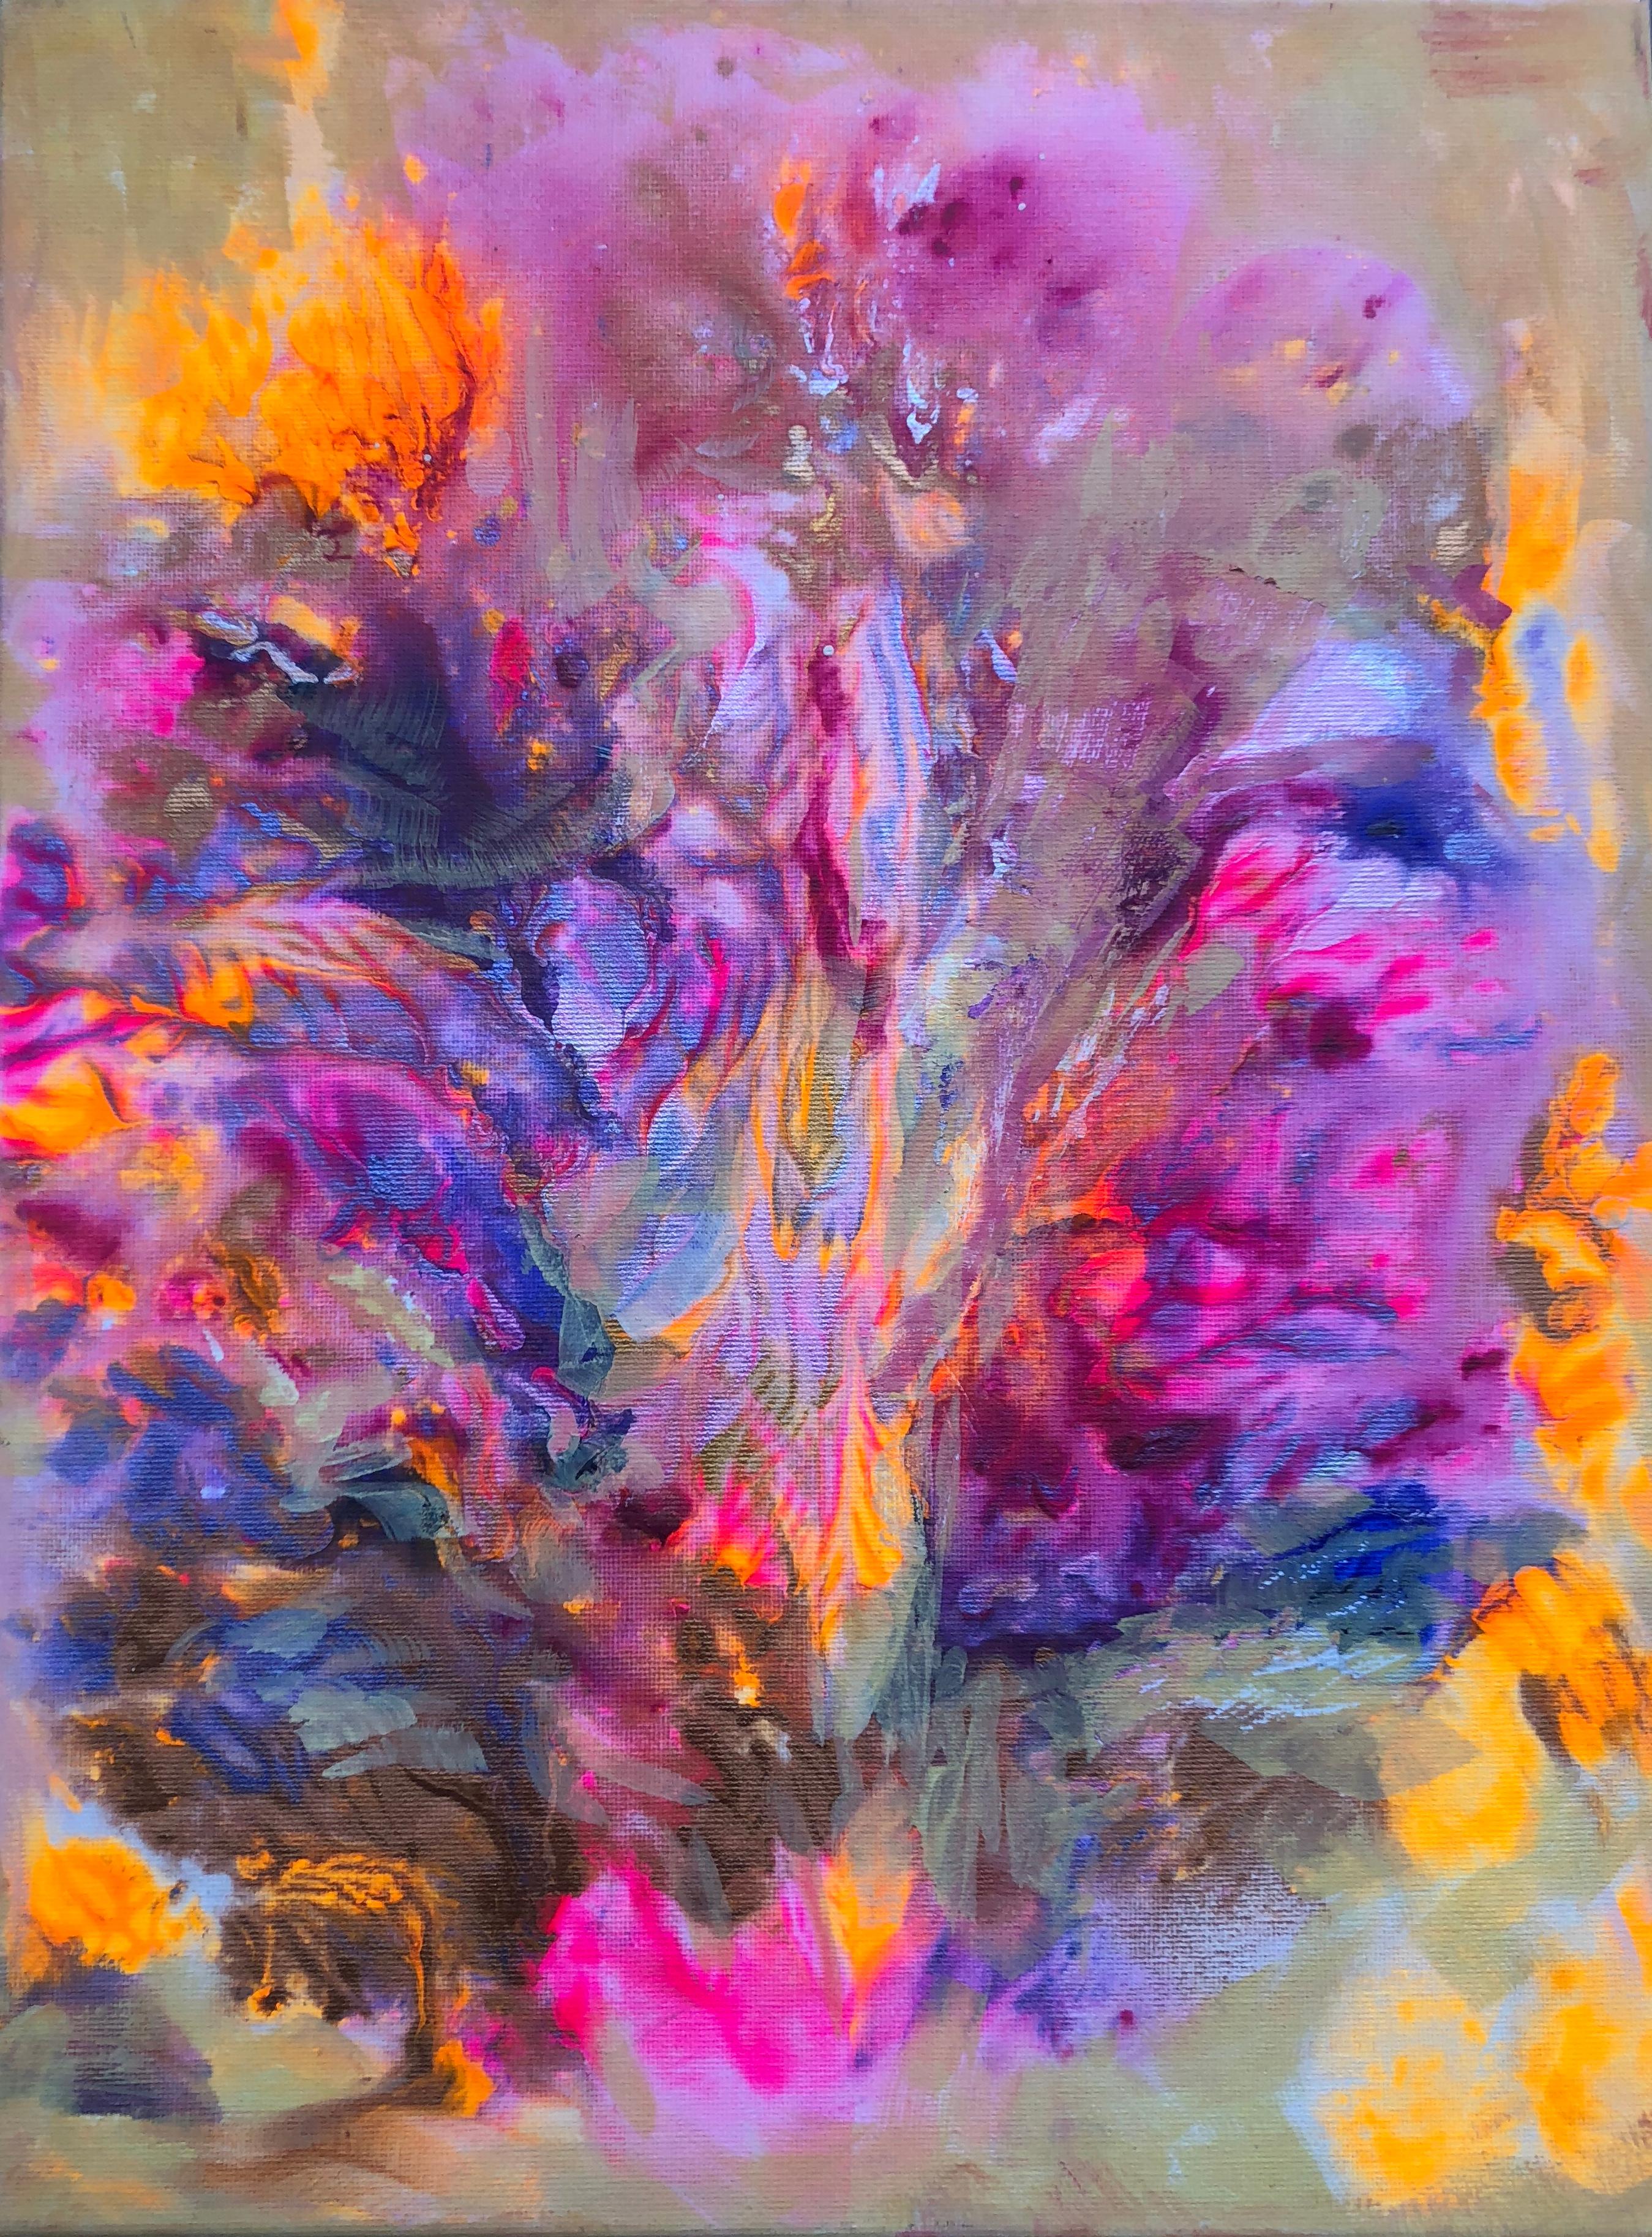 Contemporary art 21st century - painting on canvas - purple, orange, blue - Mixed Media Art by Volodymyr Zayichenko